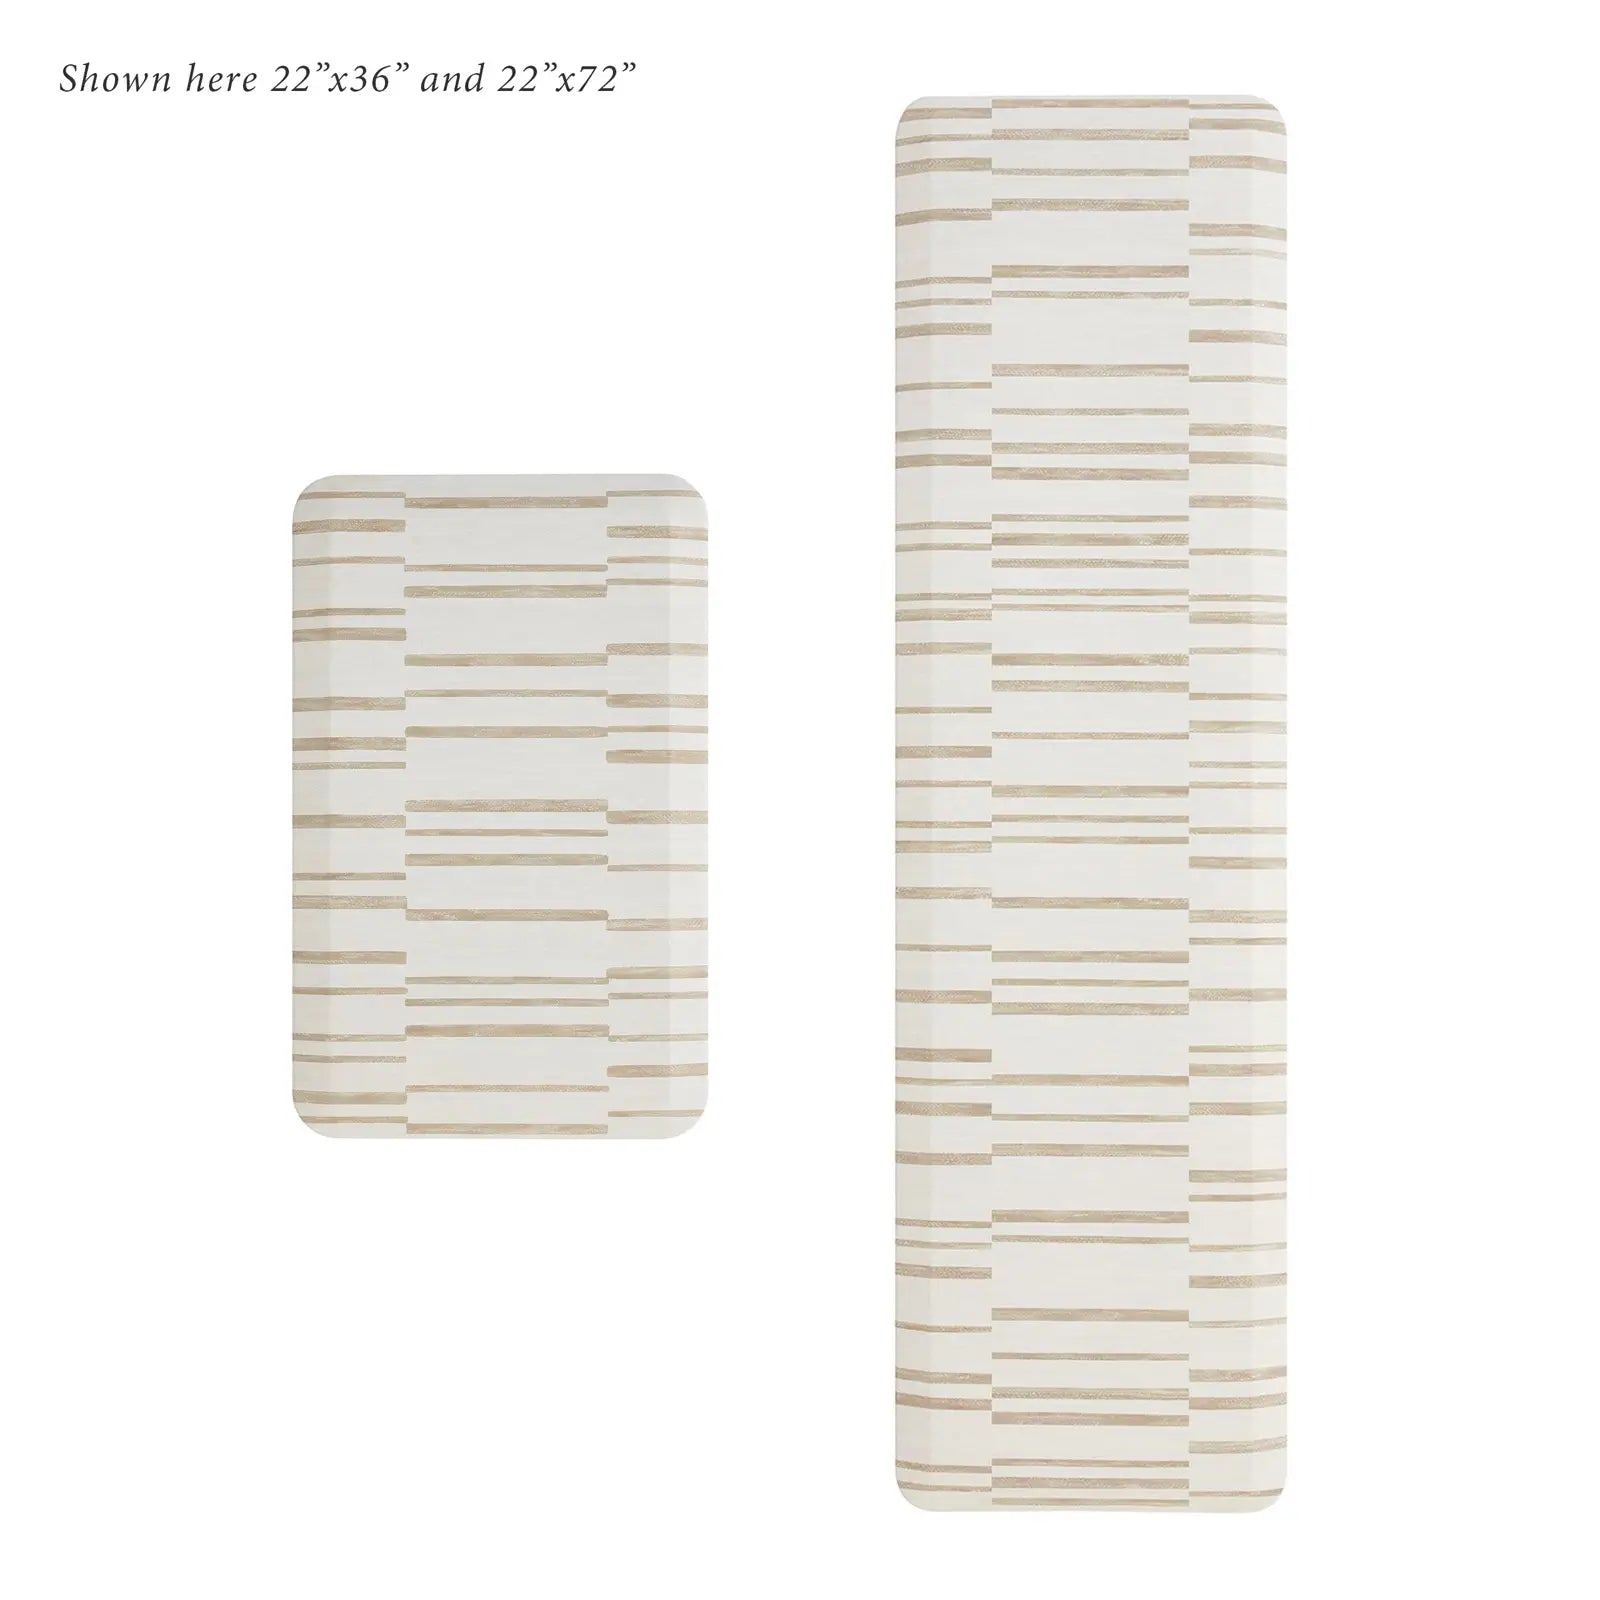 Beige inverted stripe kitchen mat shown in size 22x36 and 22x72